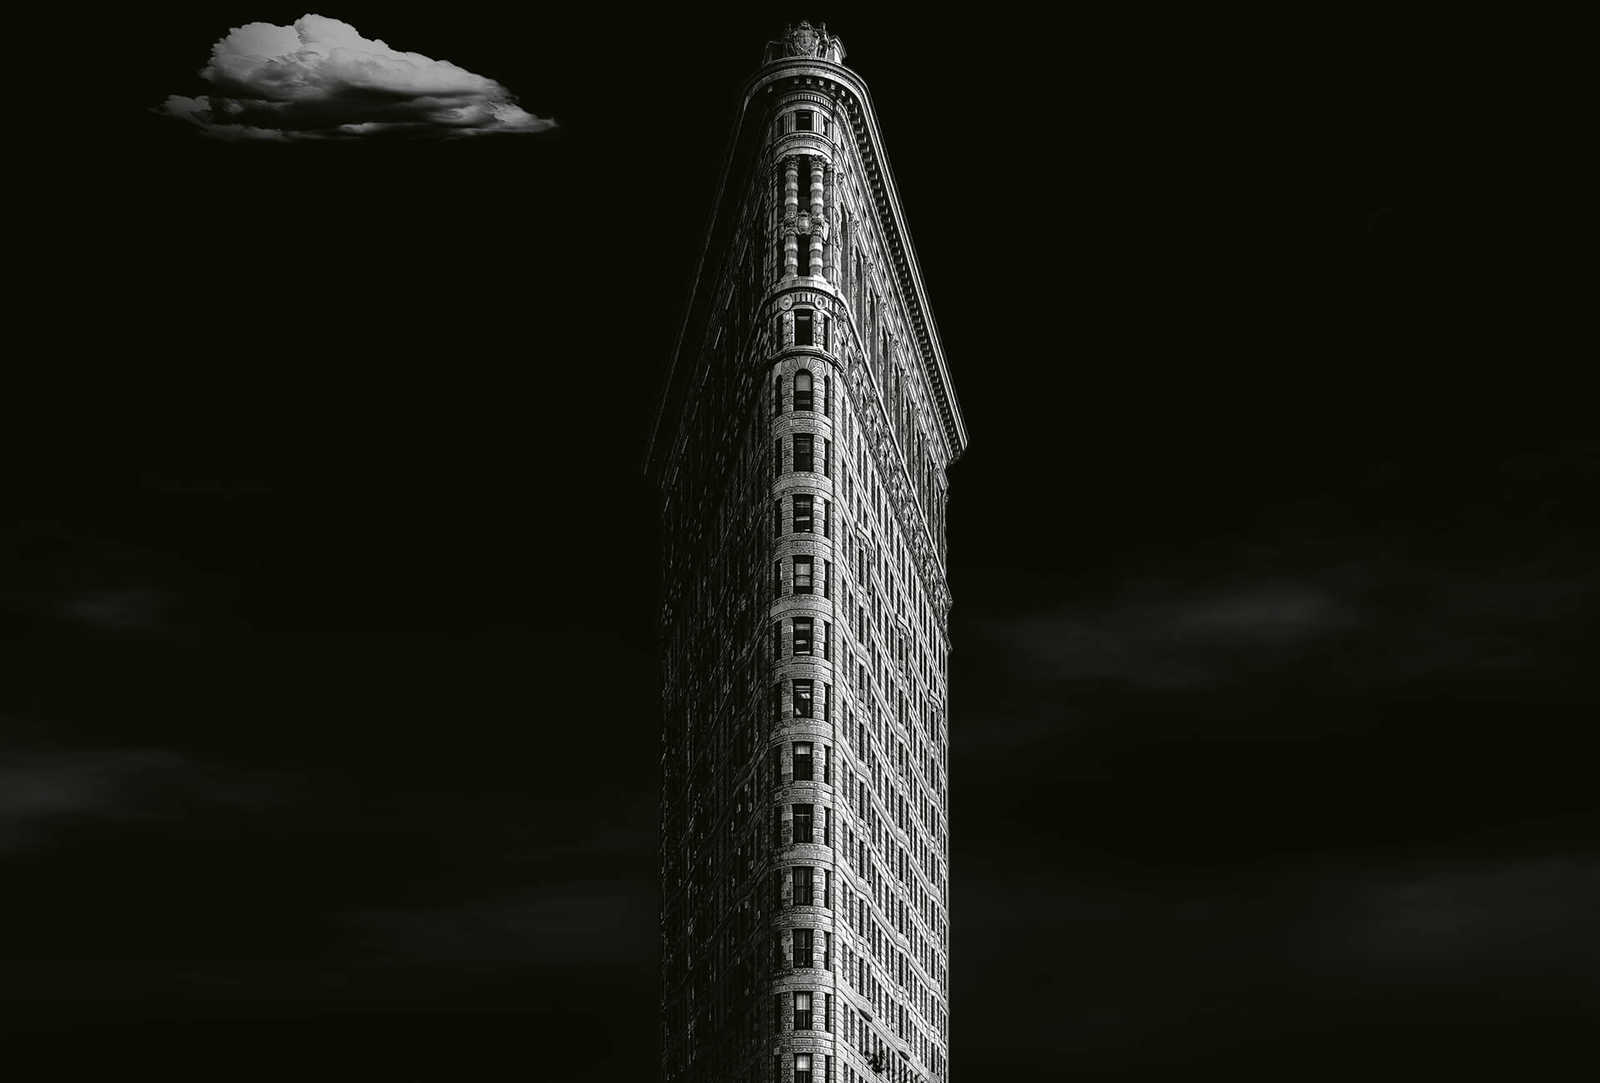         Photo wallpaper skyscraper in New York - black, white, grey
    